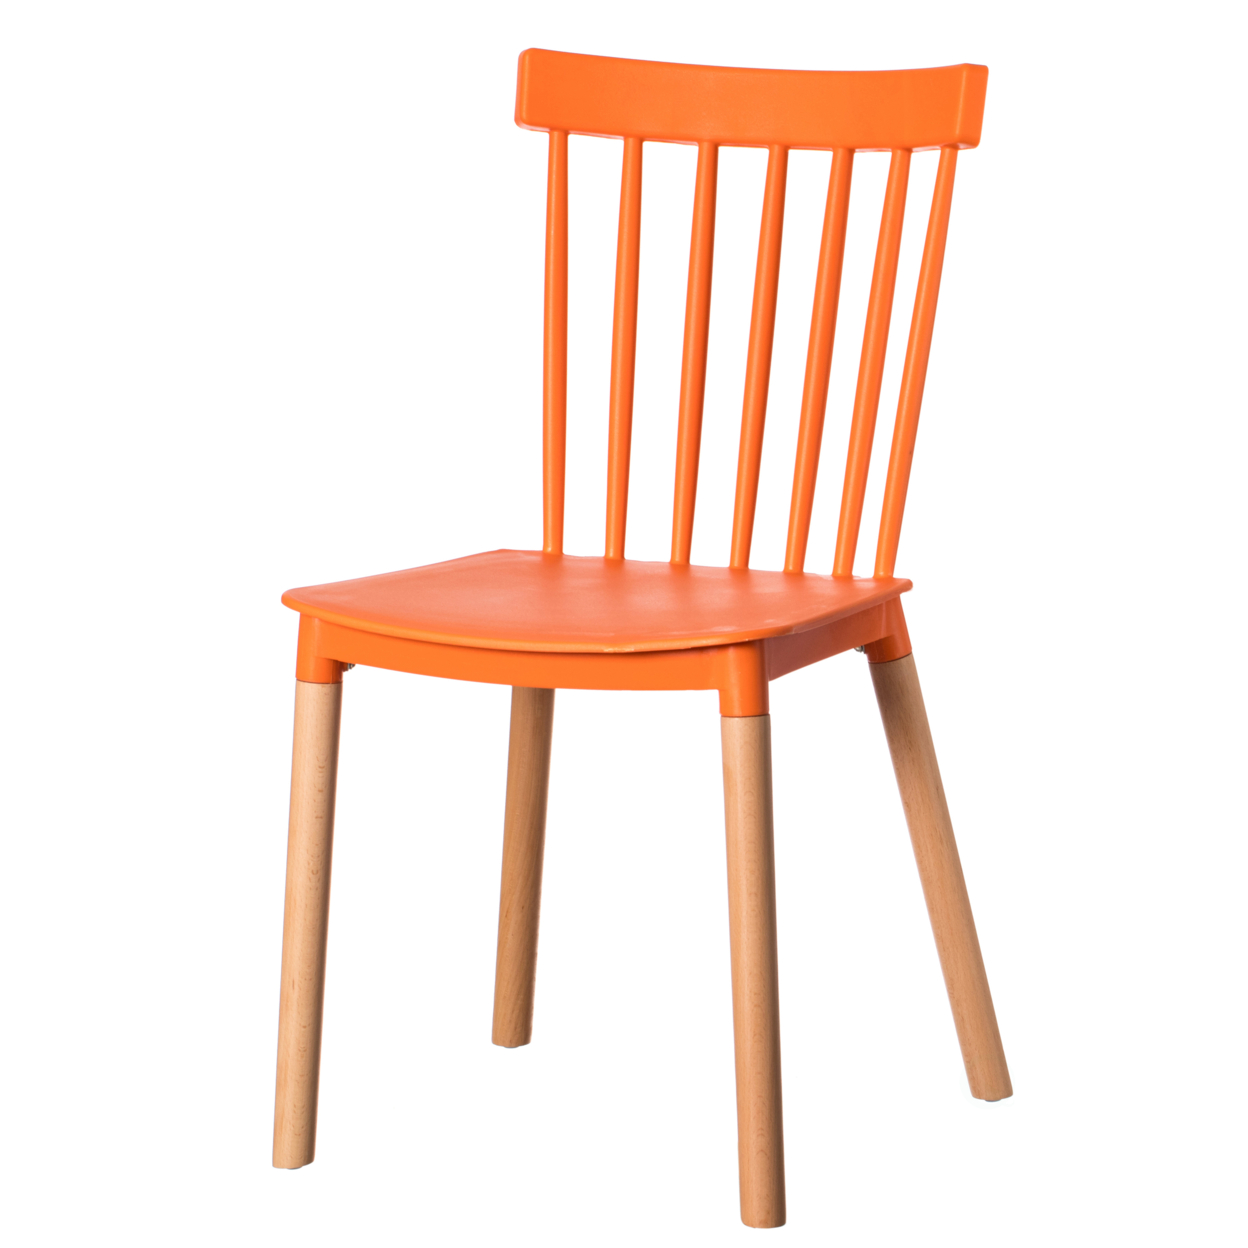 Modern Plastic Dining Chair Windsor Design With Beech Wood Legs - Set Of 4 Orange